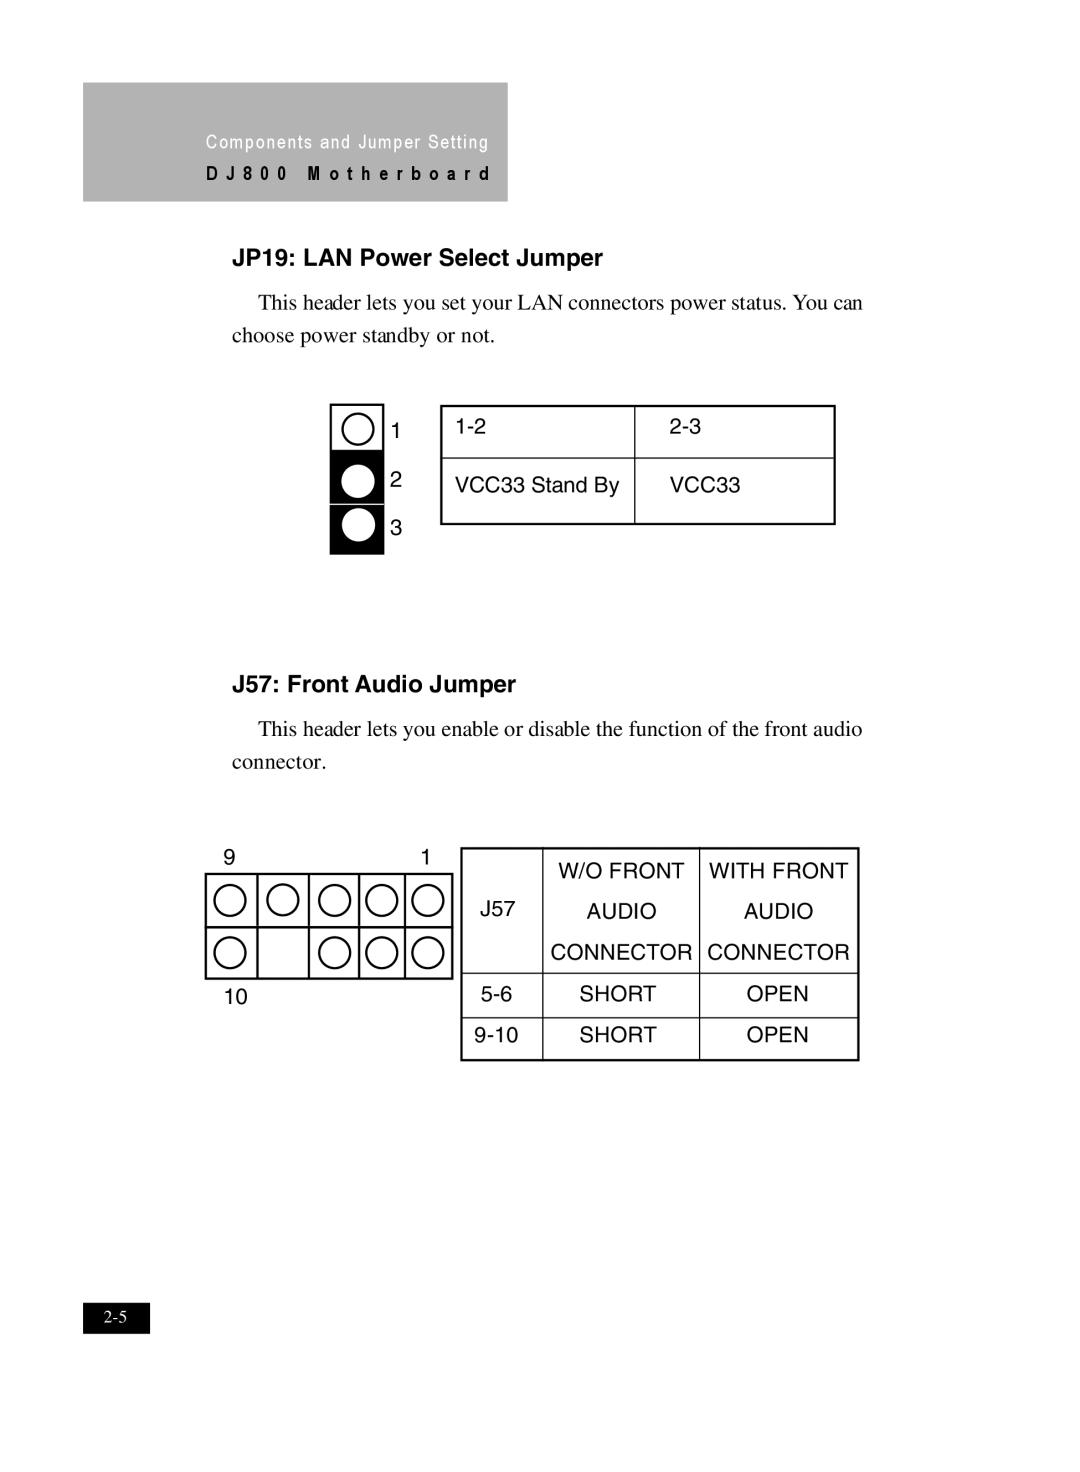 IBM DJ800 user manual JP19 LAN Power Select Jumper, J57 Front Audio Jumper 